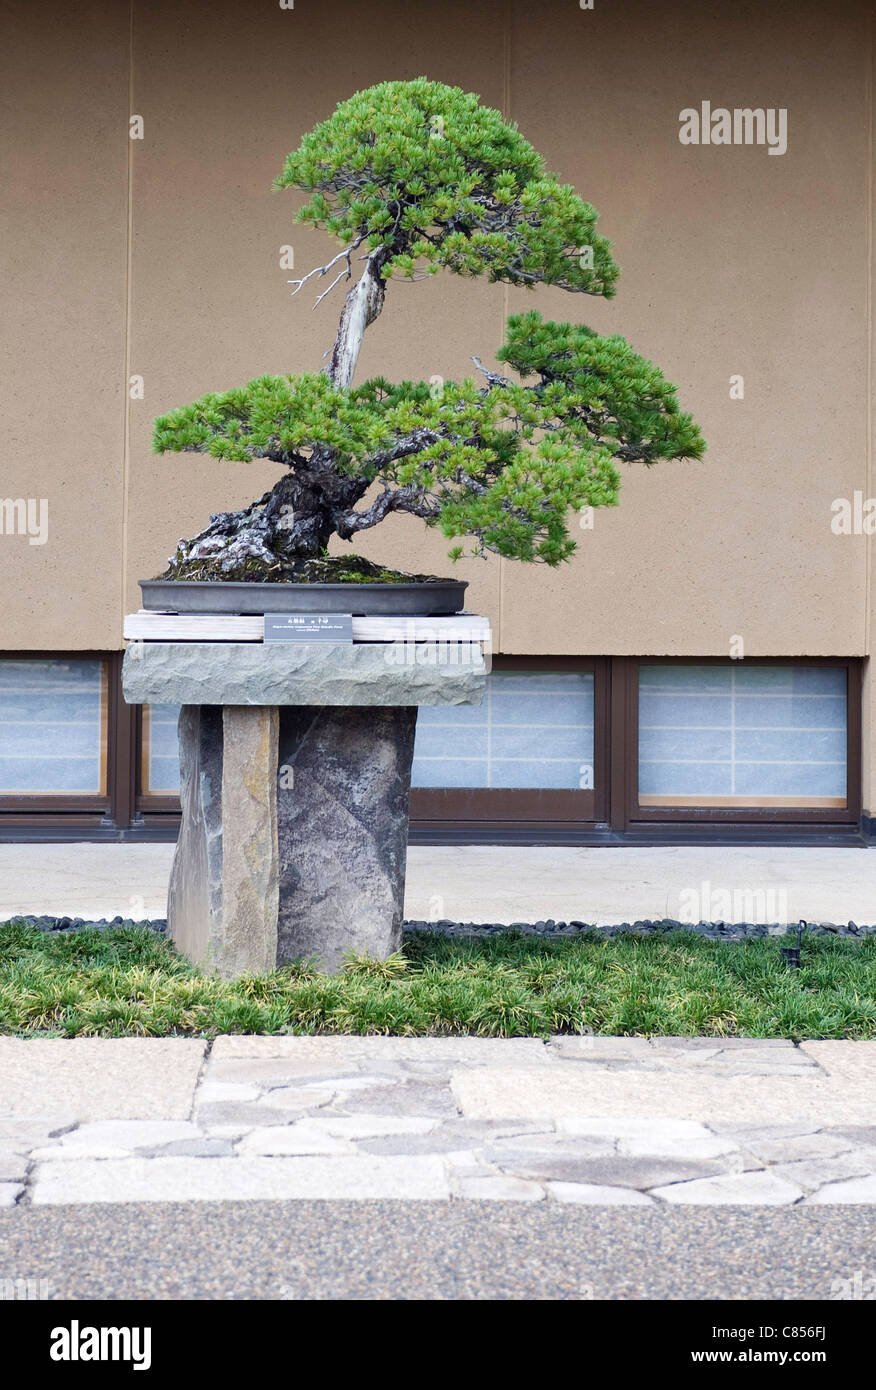 Photo shows 'Chihiro', a Japanese five-needle pine tree on display at the Saitama Omiya Bonsai Museum of Art in Saitama, Japan on 15 Aug. 2011. Photographer: Robert Gilhooly Stock Photo